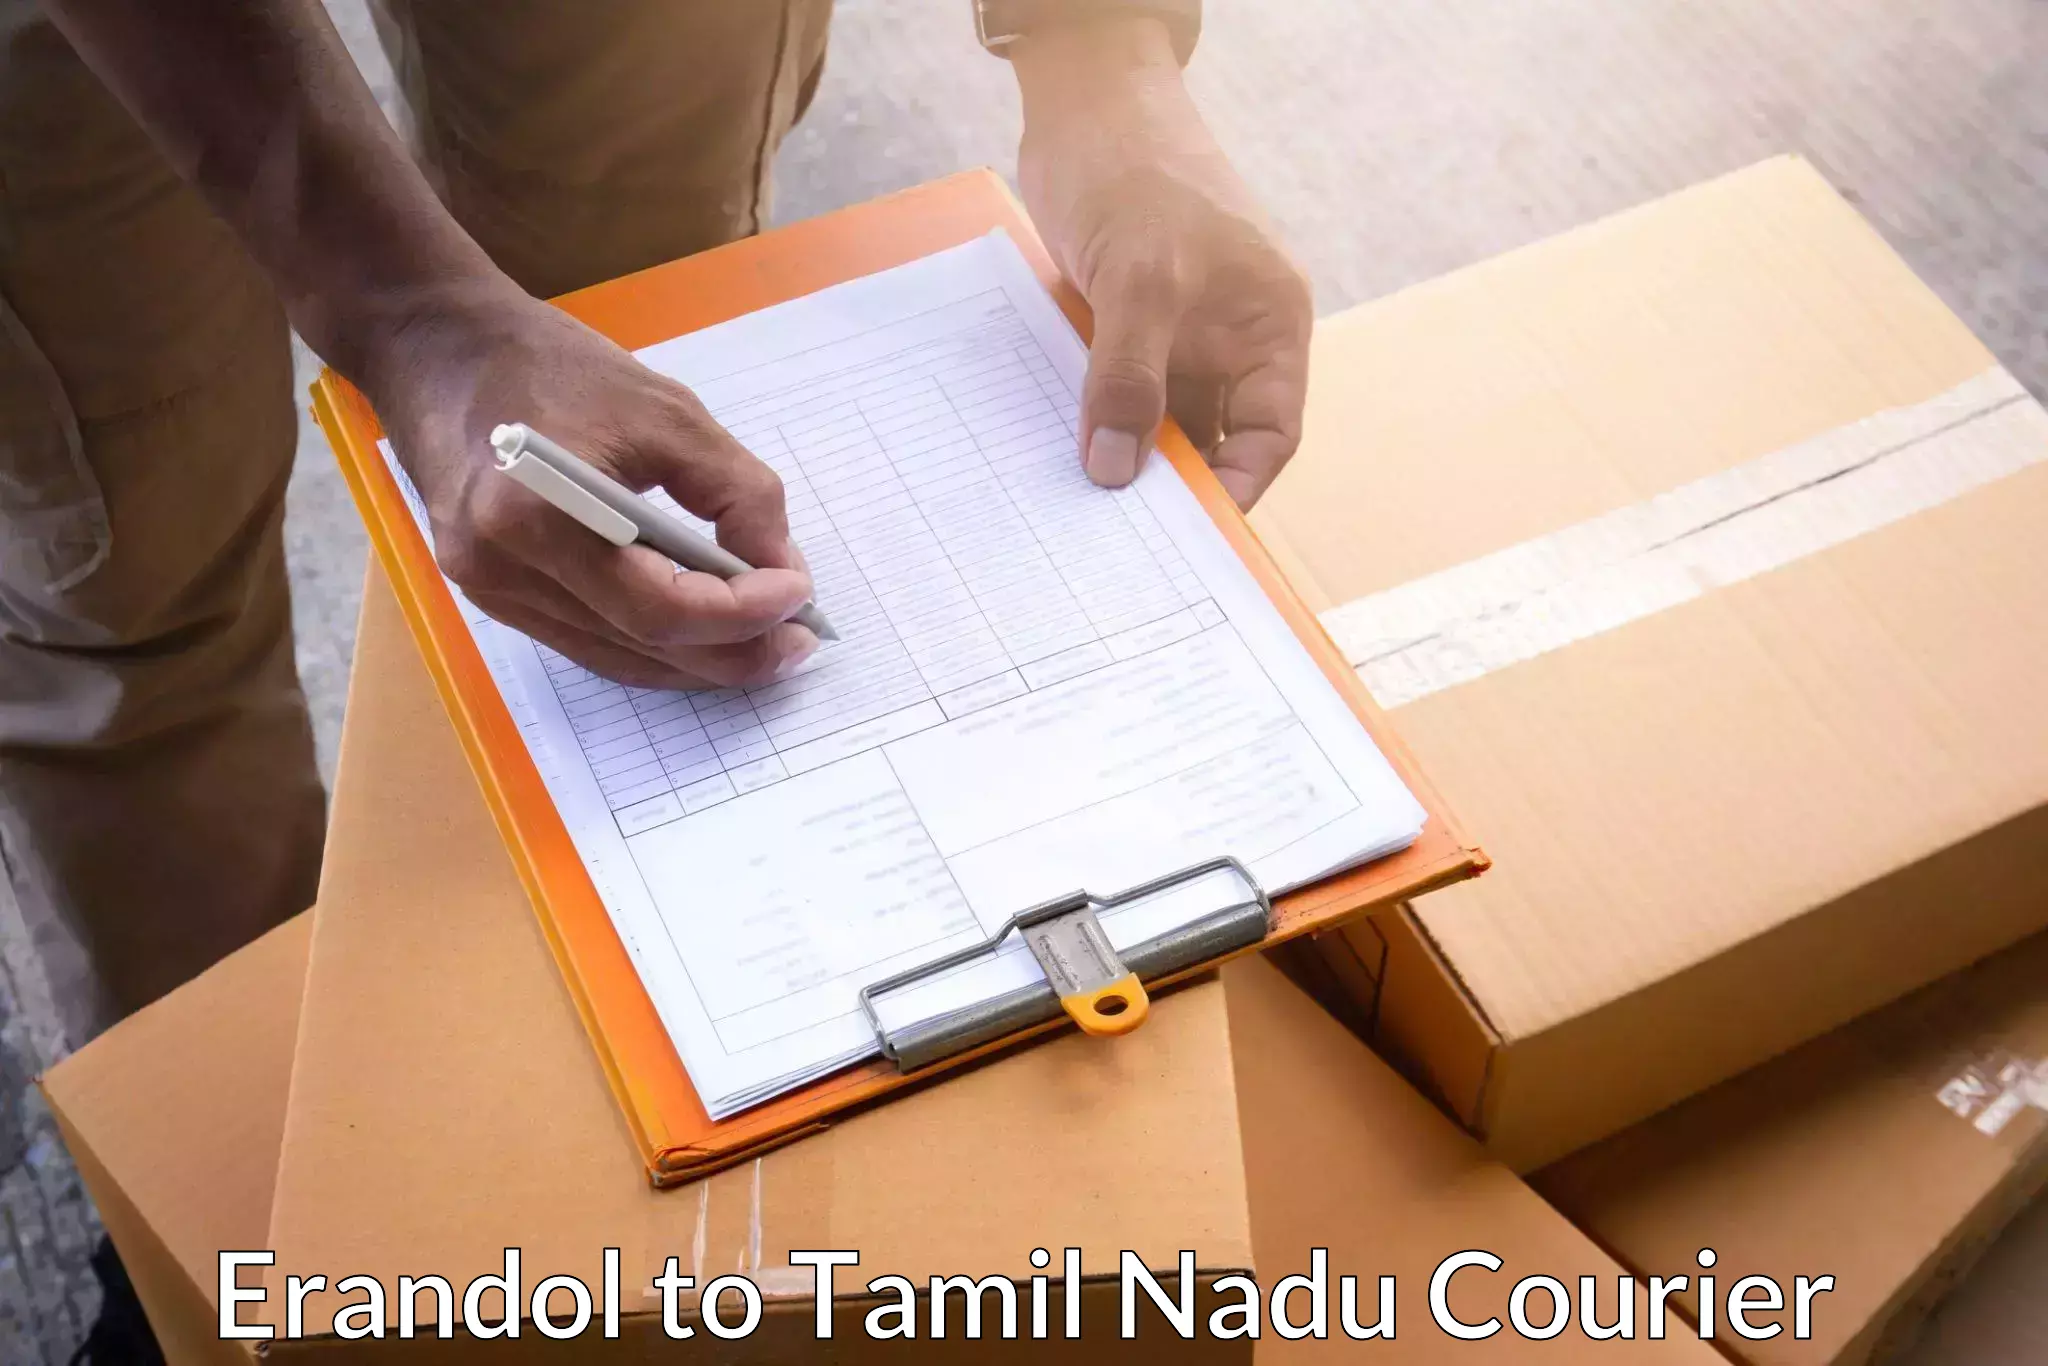 Reliable logistics providers Erandol to Chennai Port